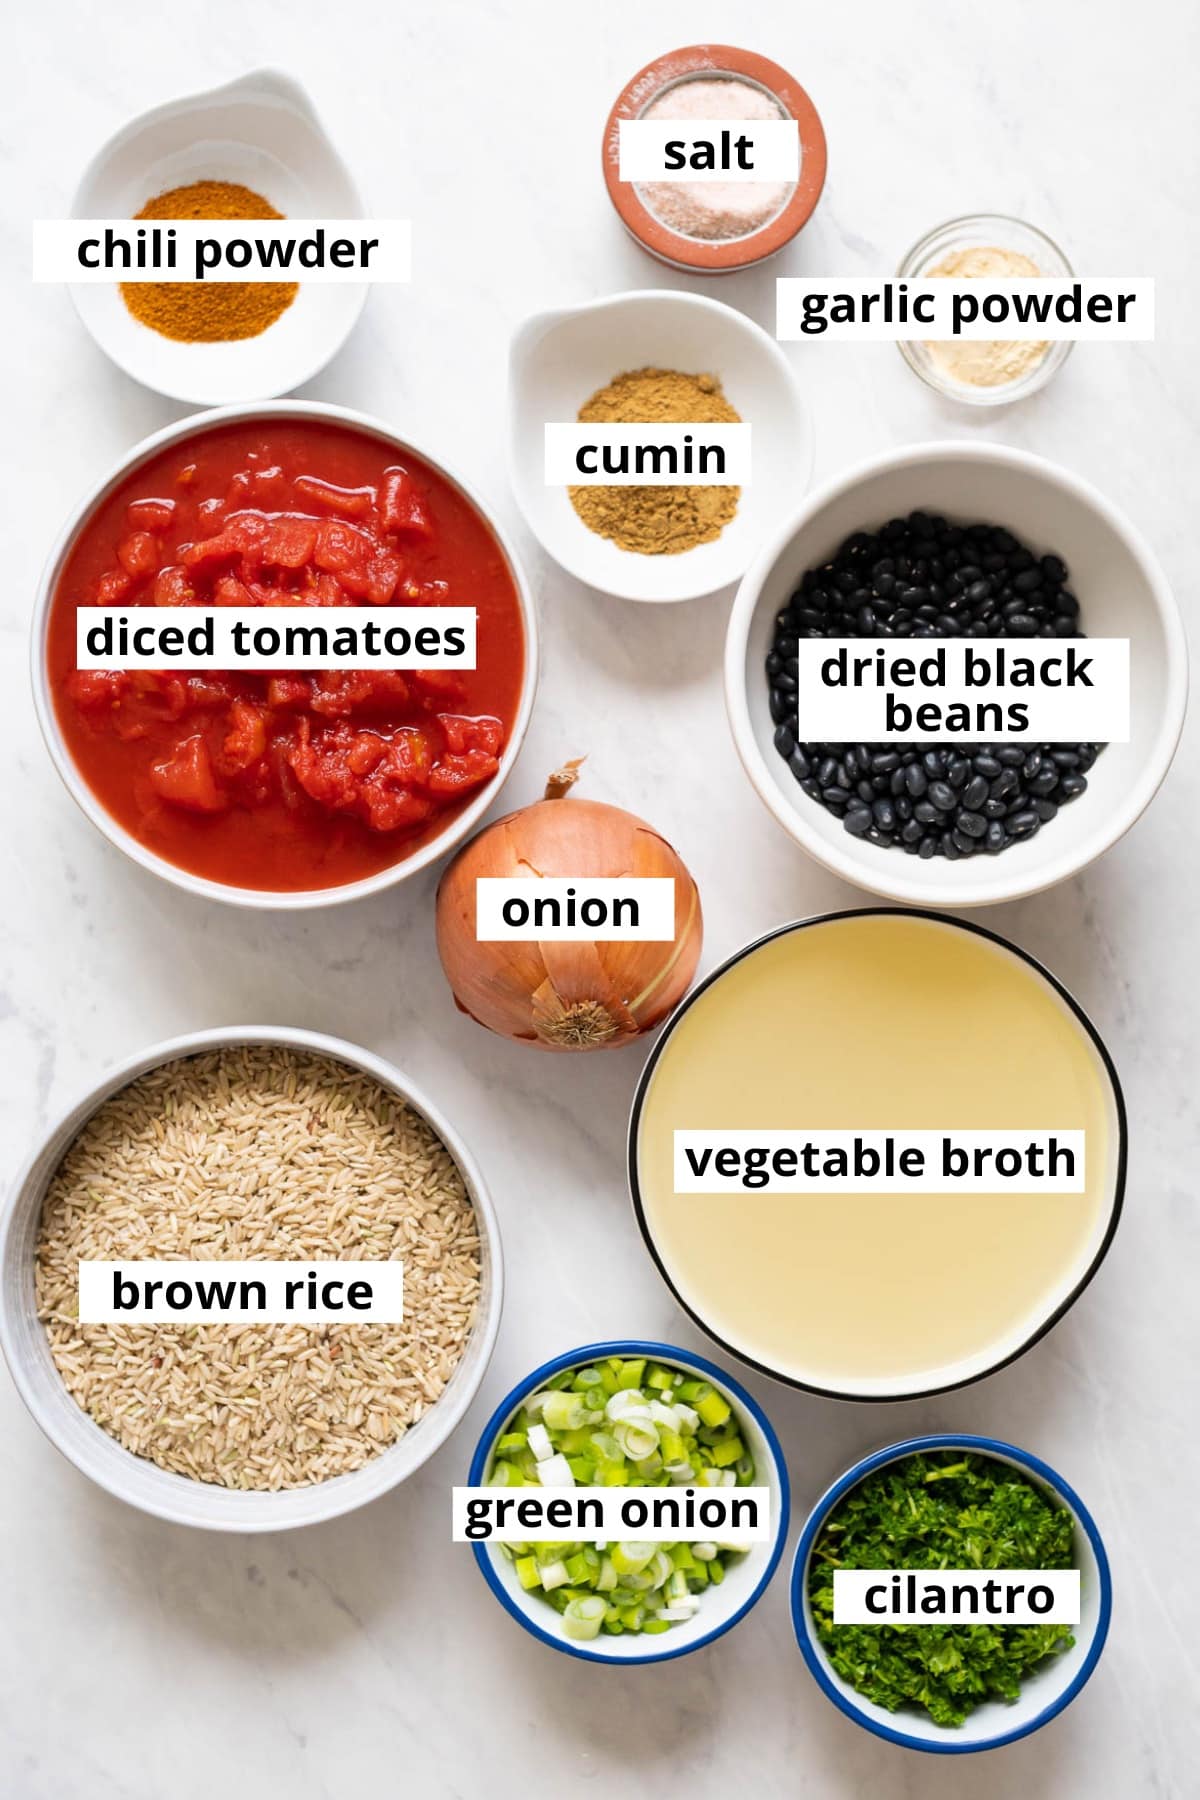 Brown rice, dried black beans, canned diced tomatoes, onion, cumin, garlic powder, chili powder, salt, cilantro, green onion, vegetable broth.